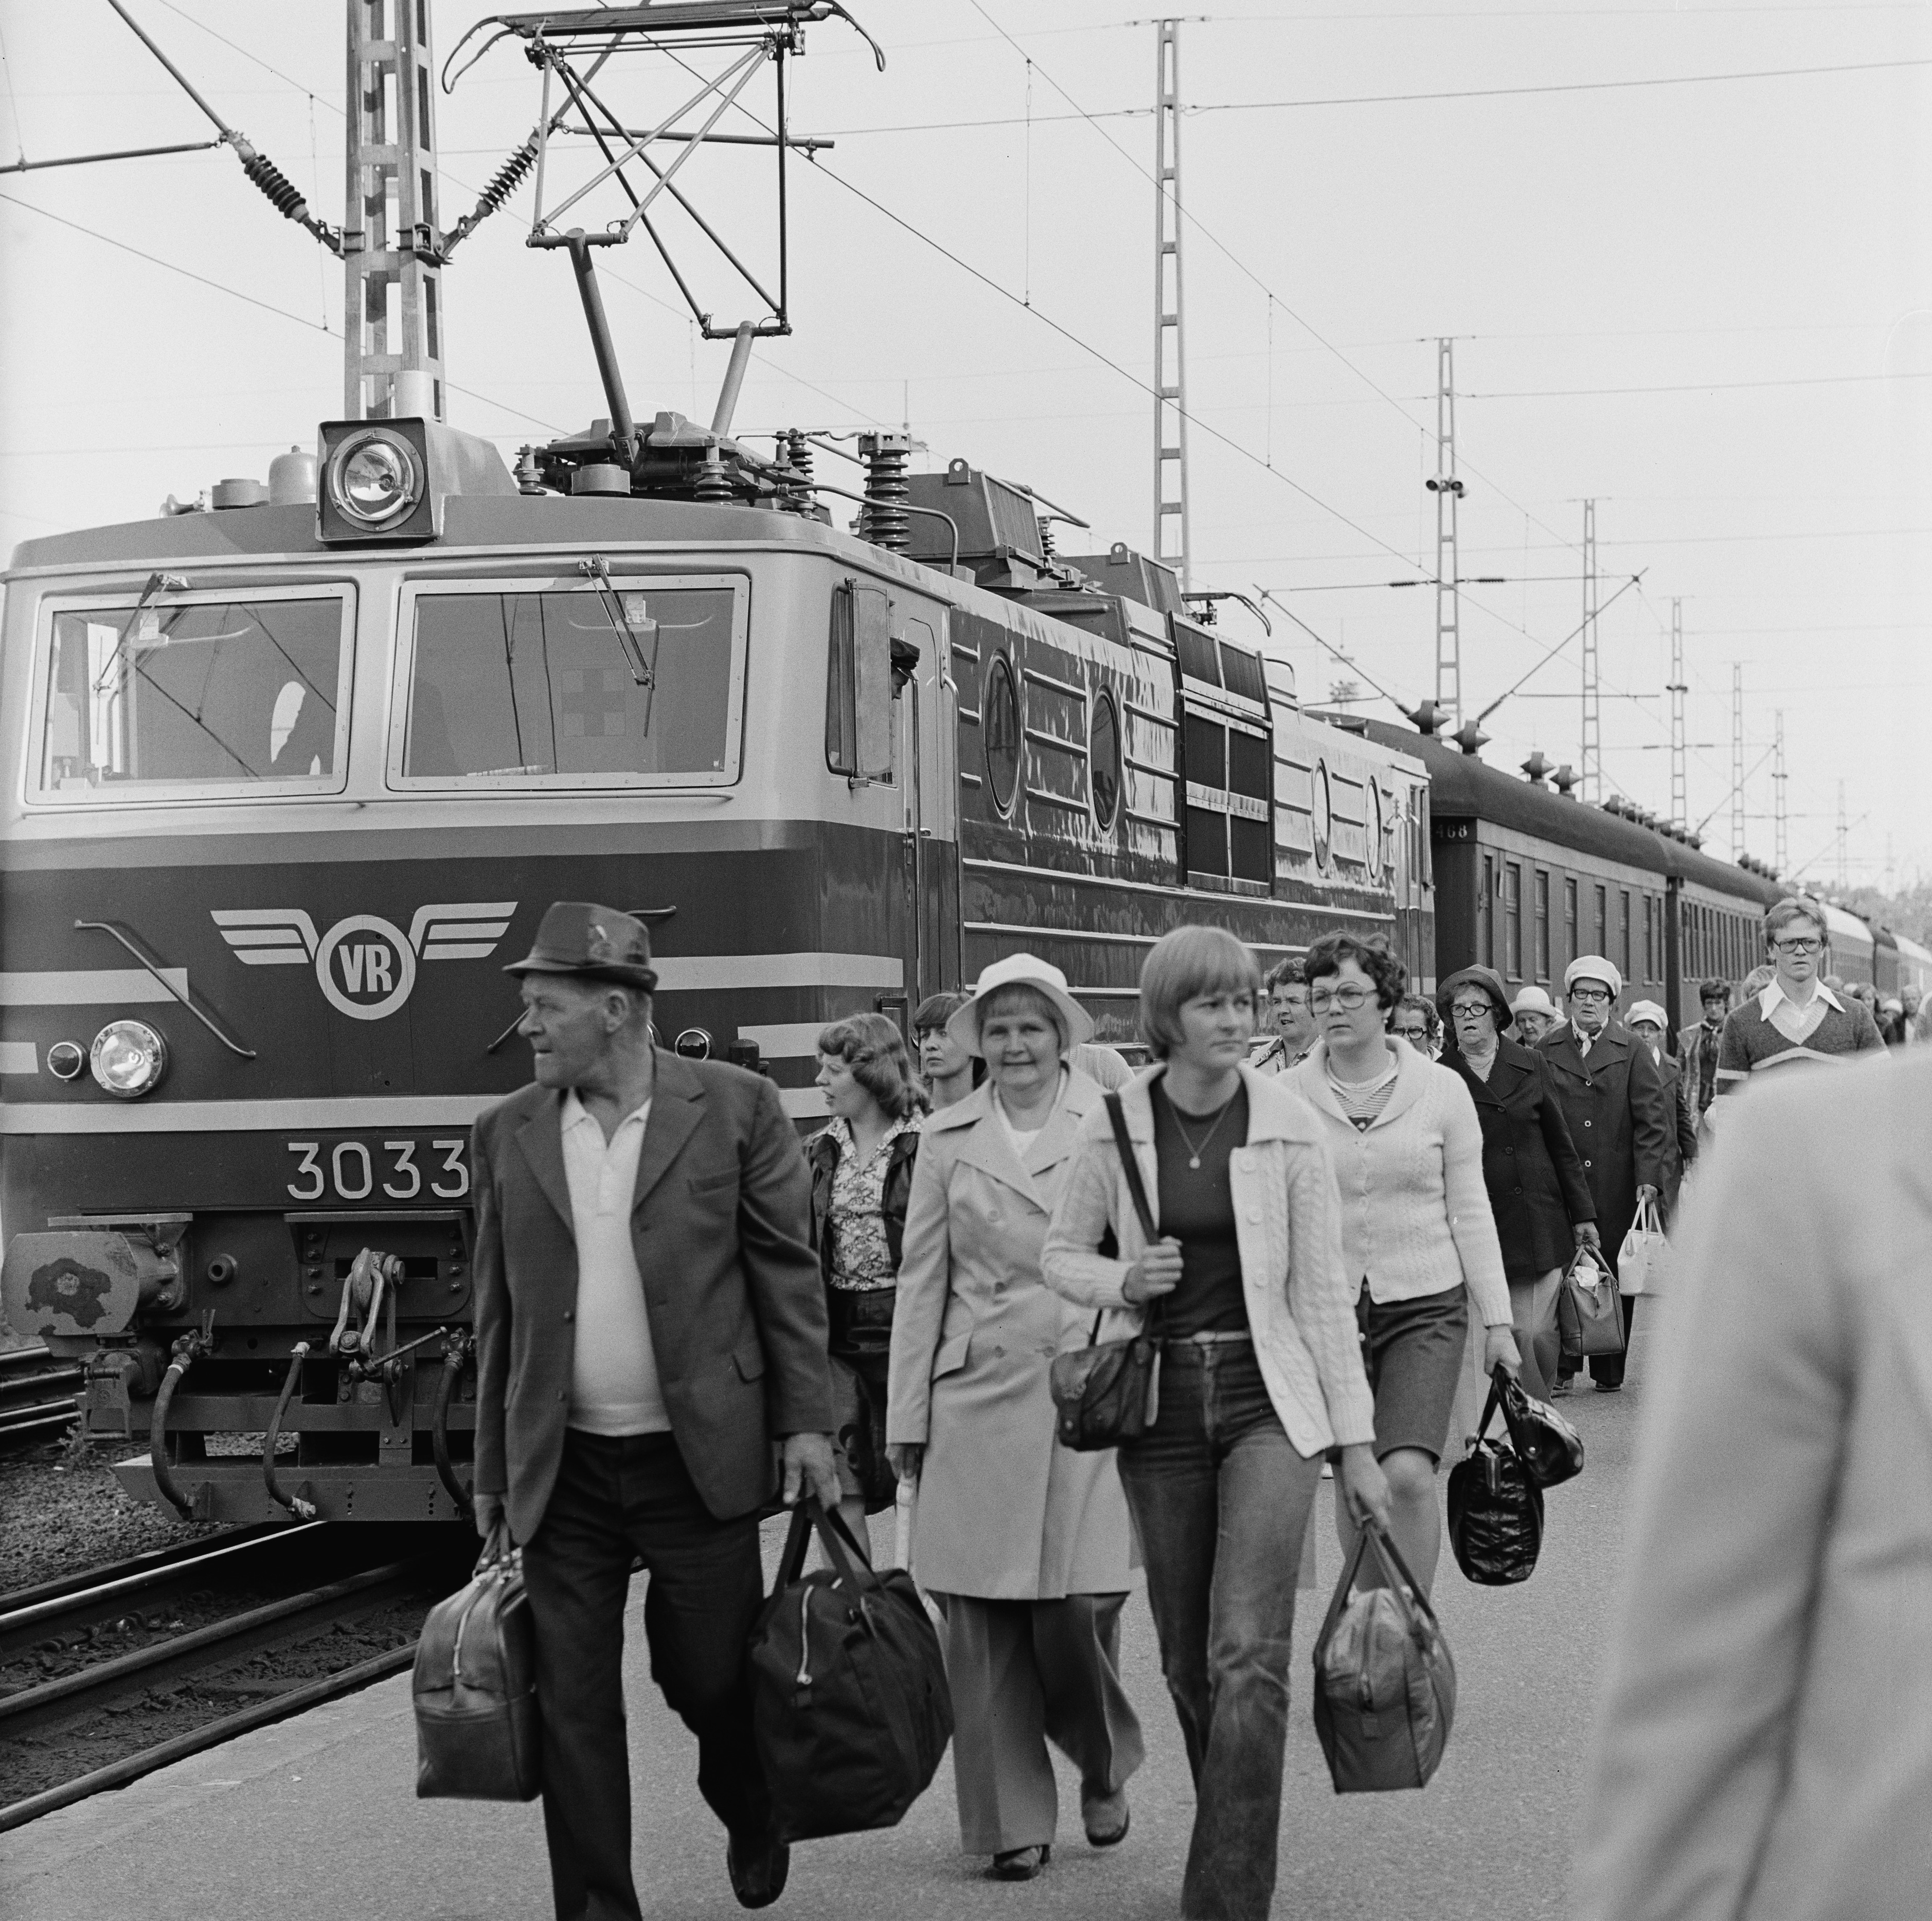 Matkustajia ja juna Helsingin rautatieasemalla.